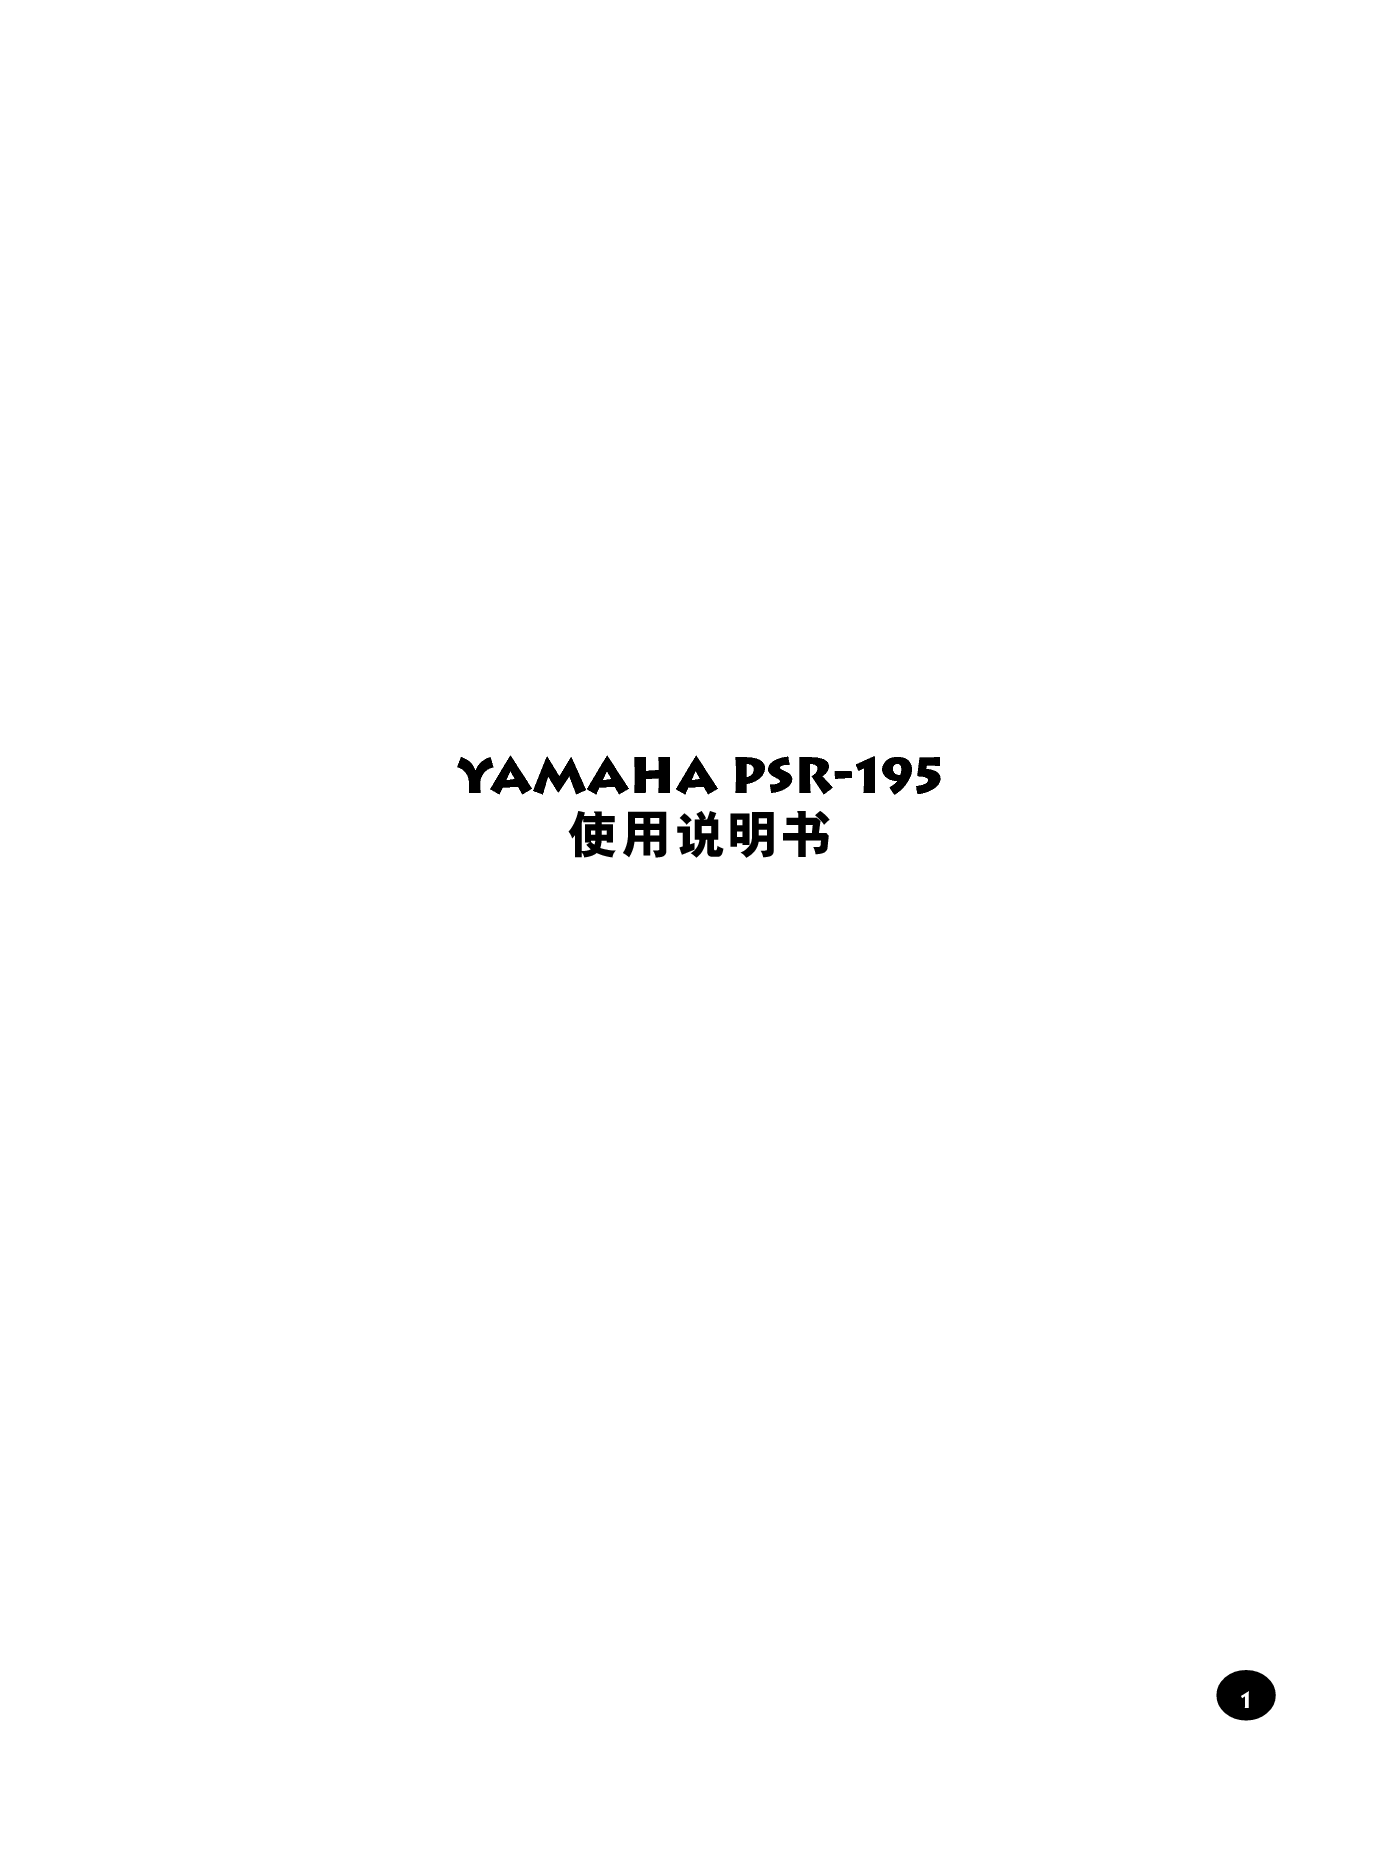 雅马哈 Yamaha PSR-195 使用说明书 封面